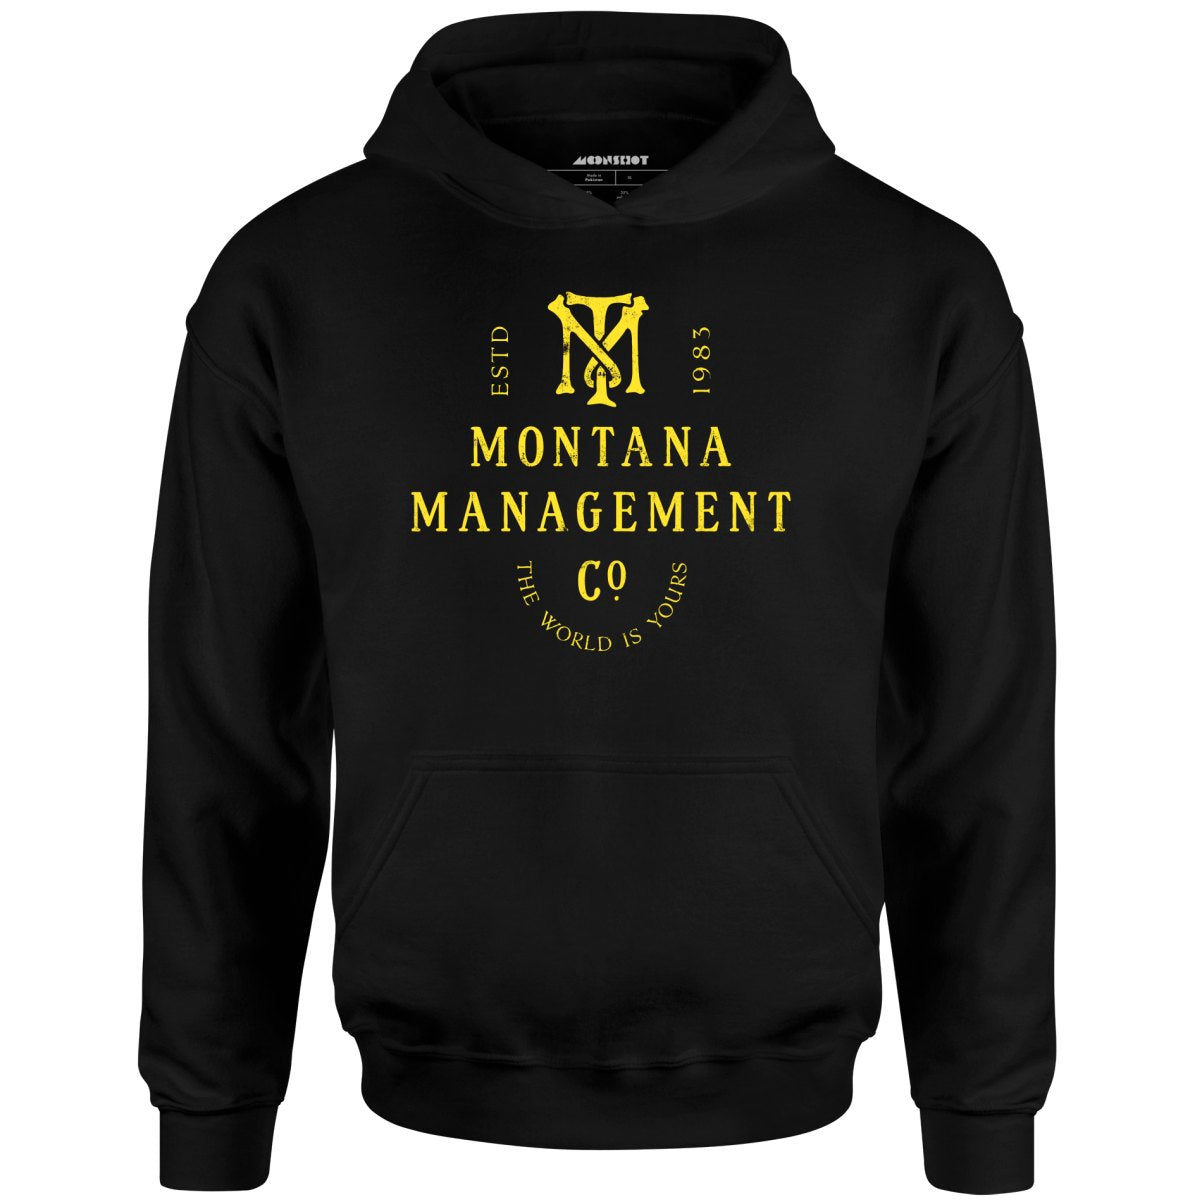 Montana Management Co. - Unisex Hoodie